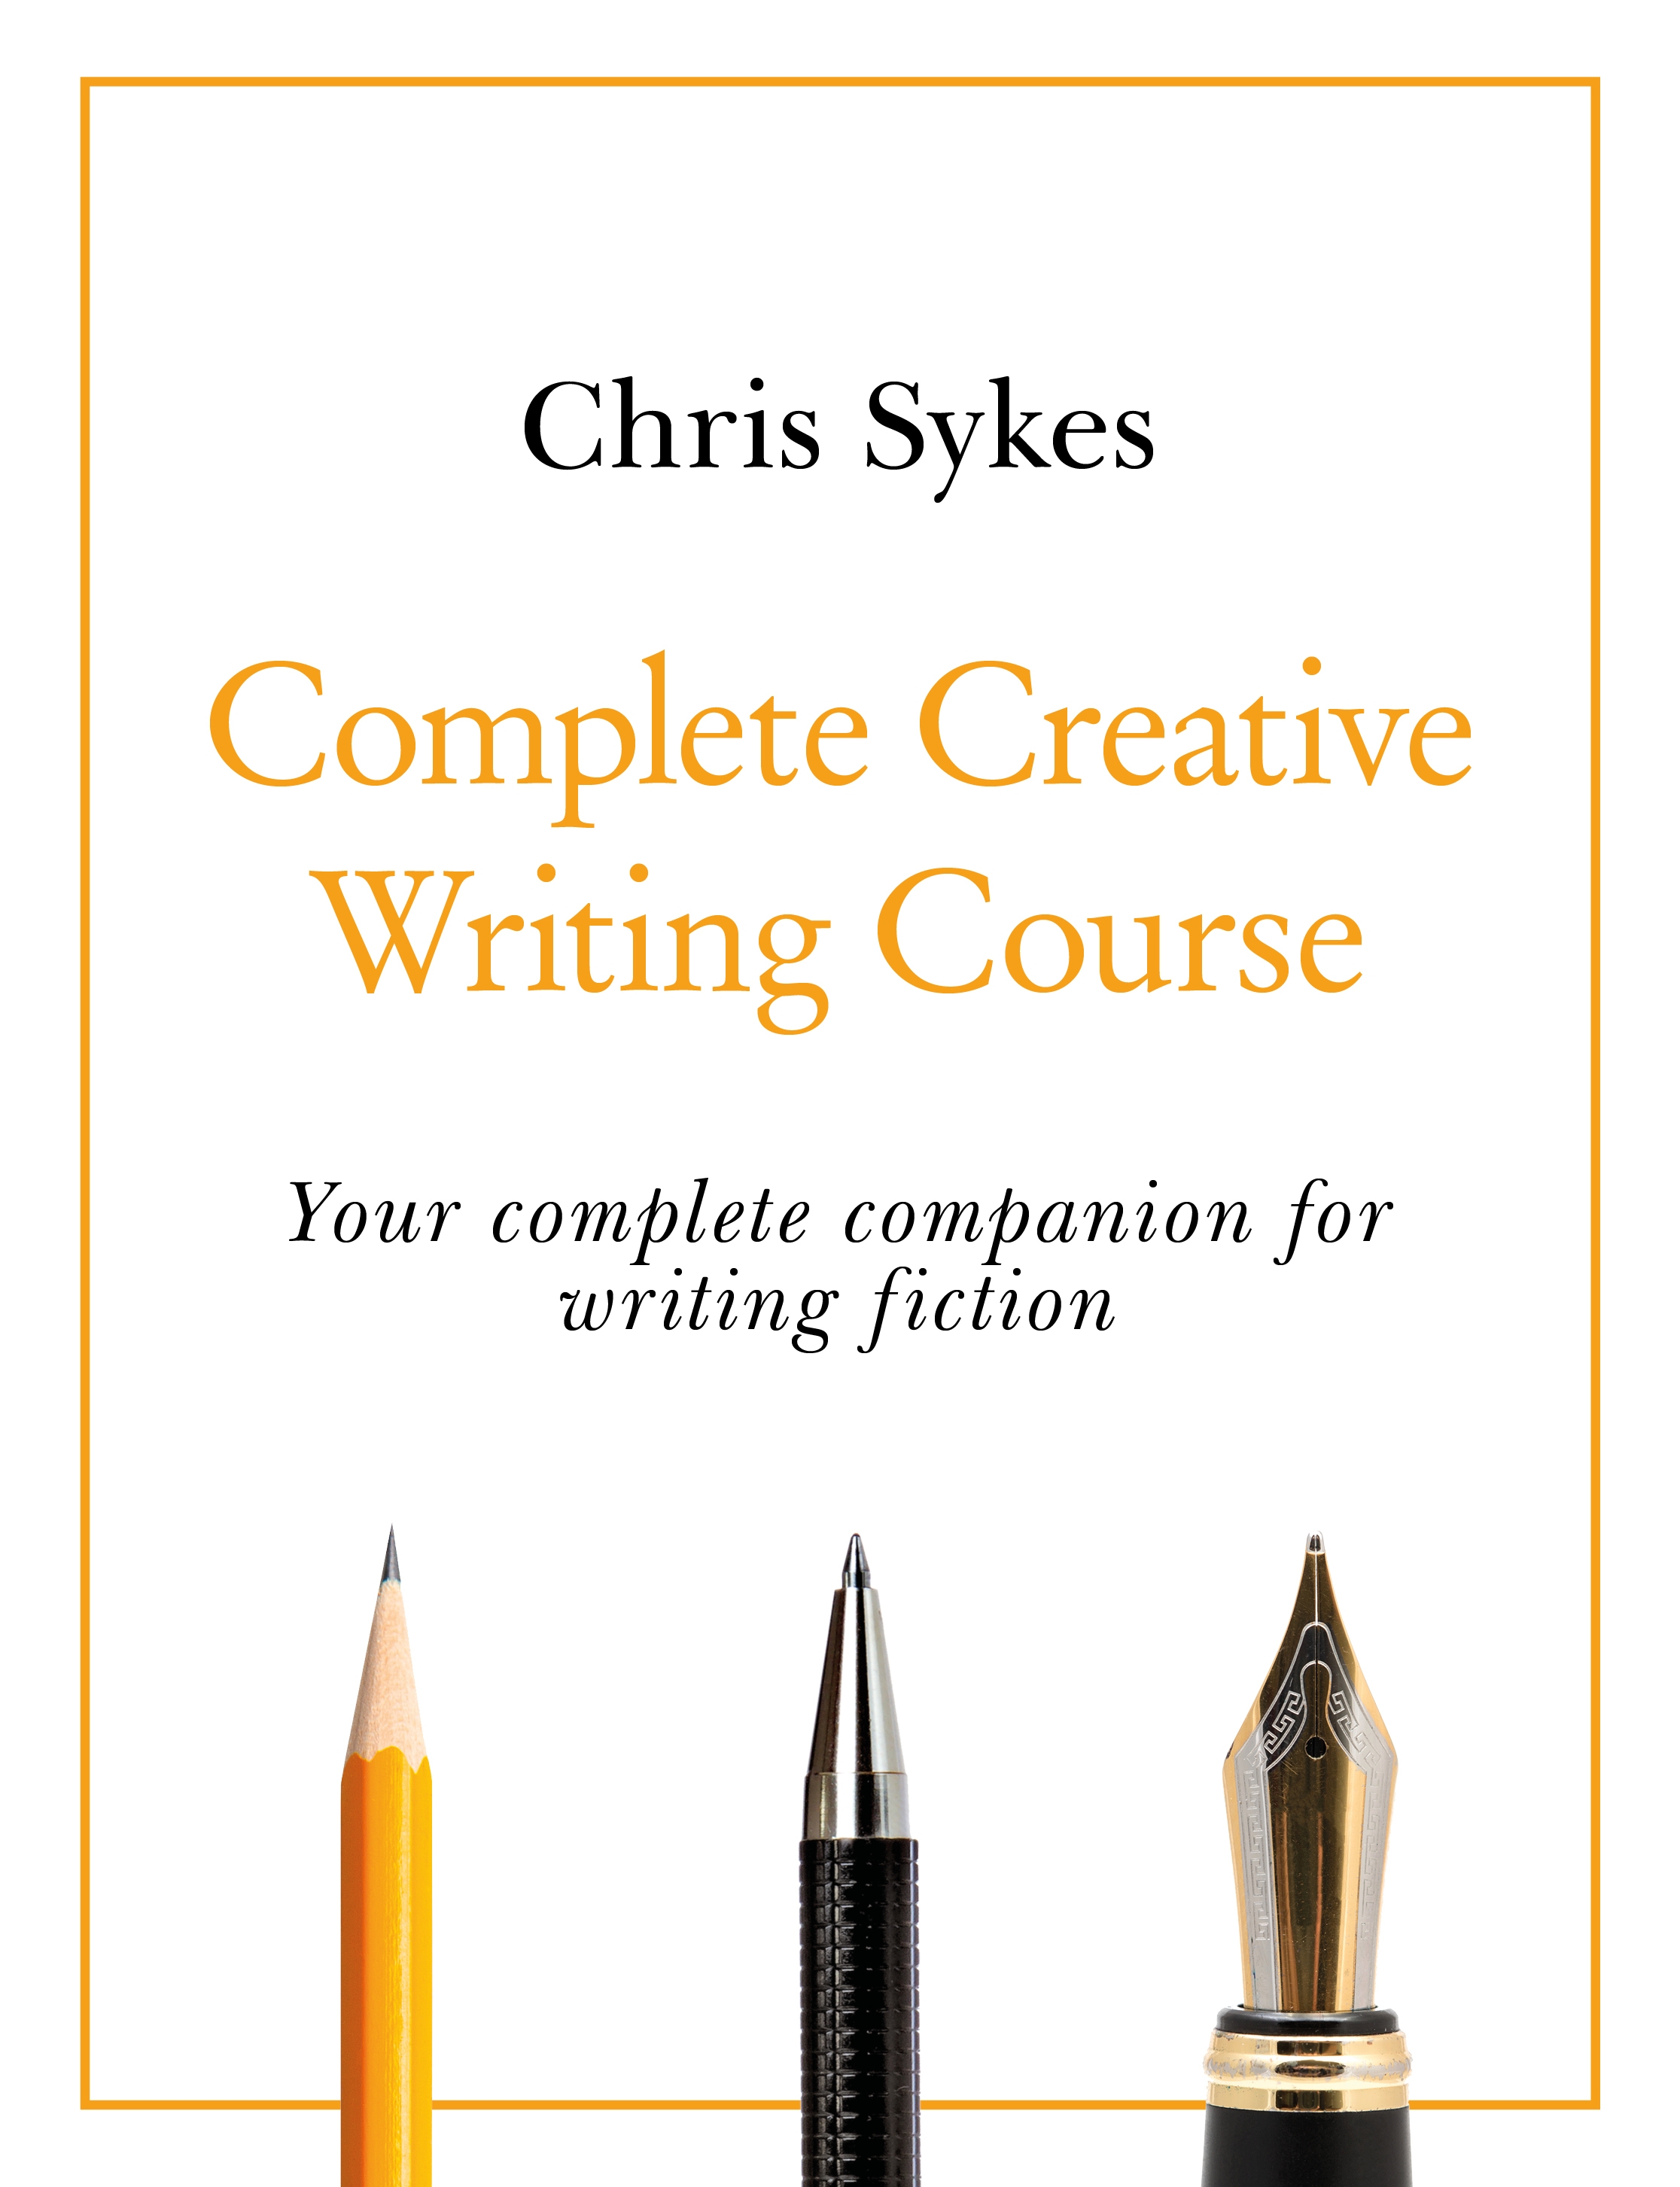 the creative writing course book